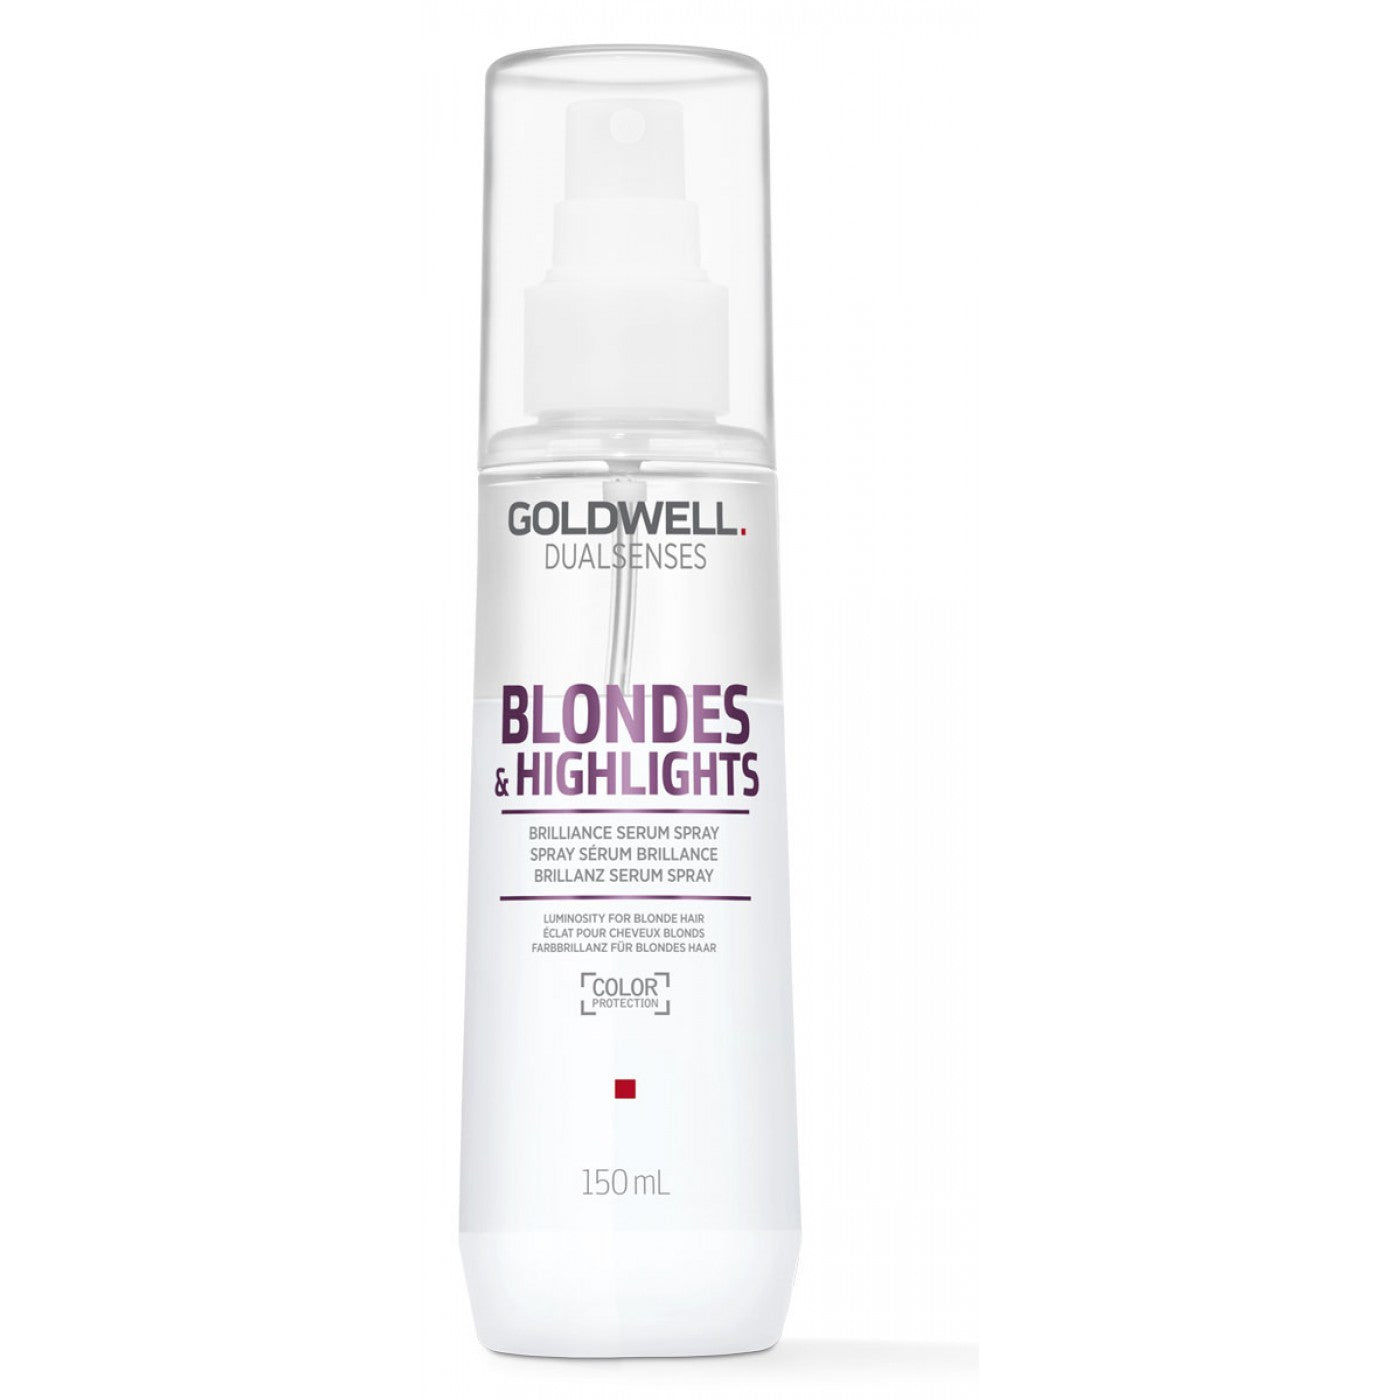 Goldwell Dualsenses Blondes & Highlights Brilliance Serum Spray